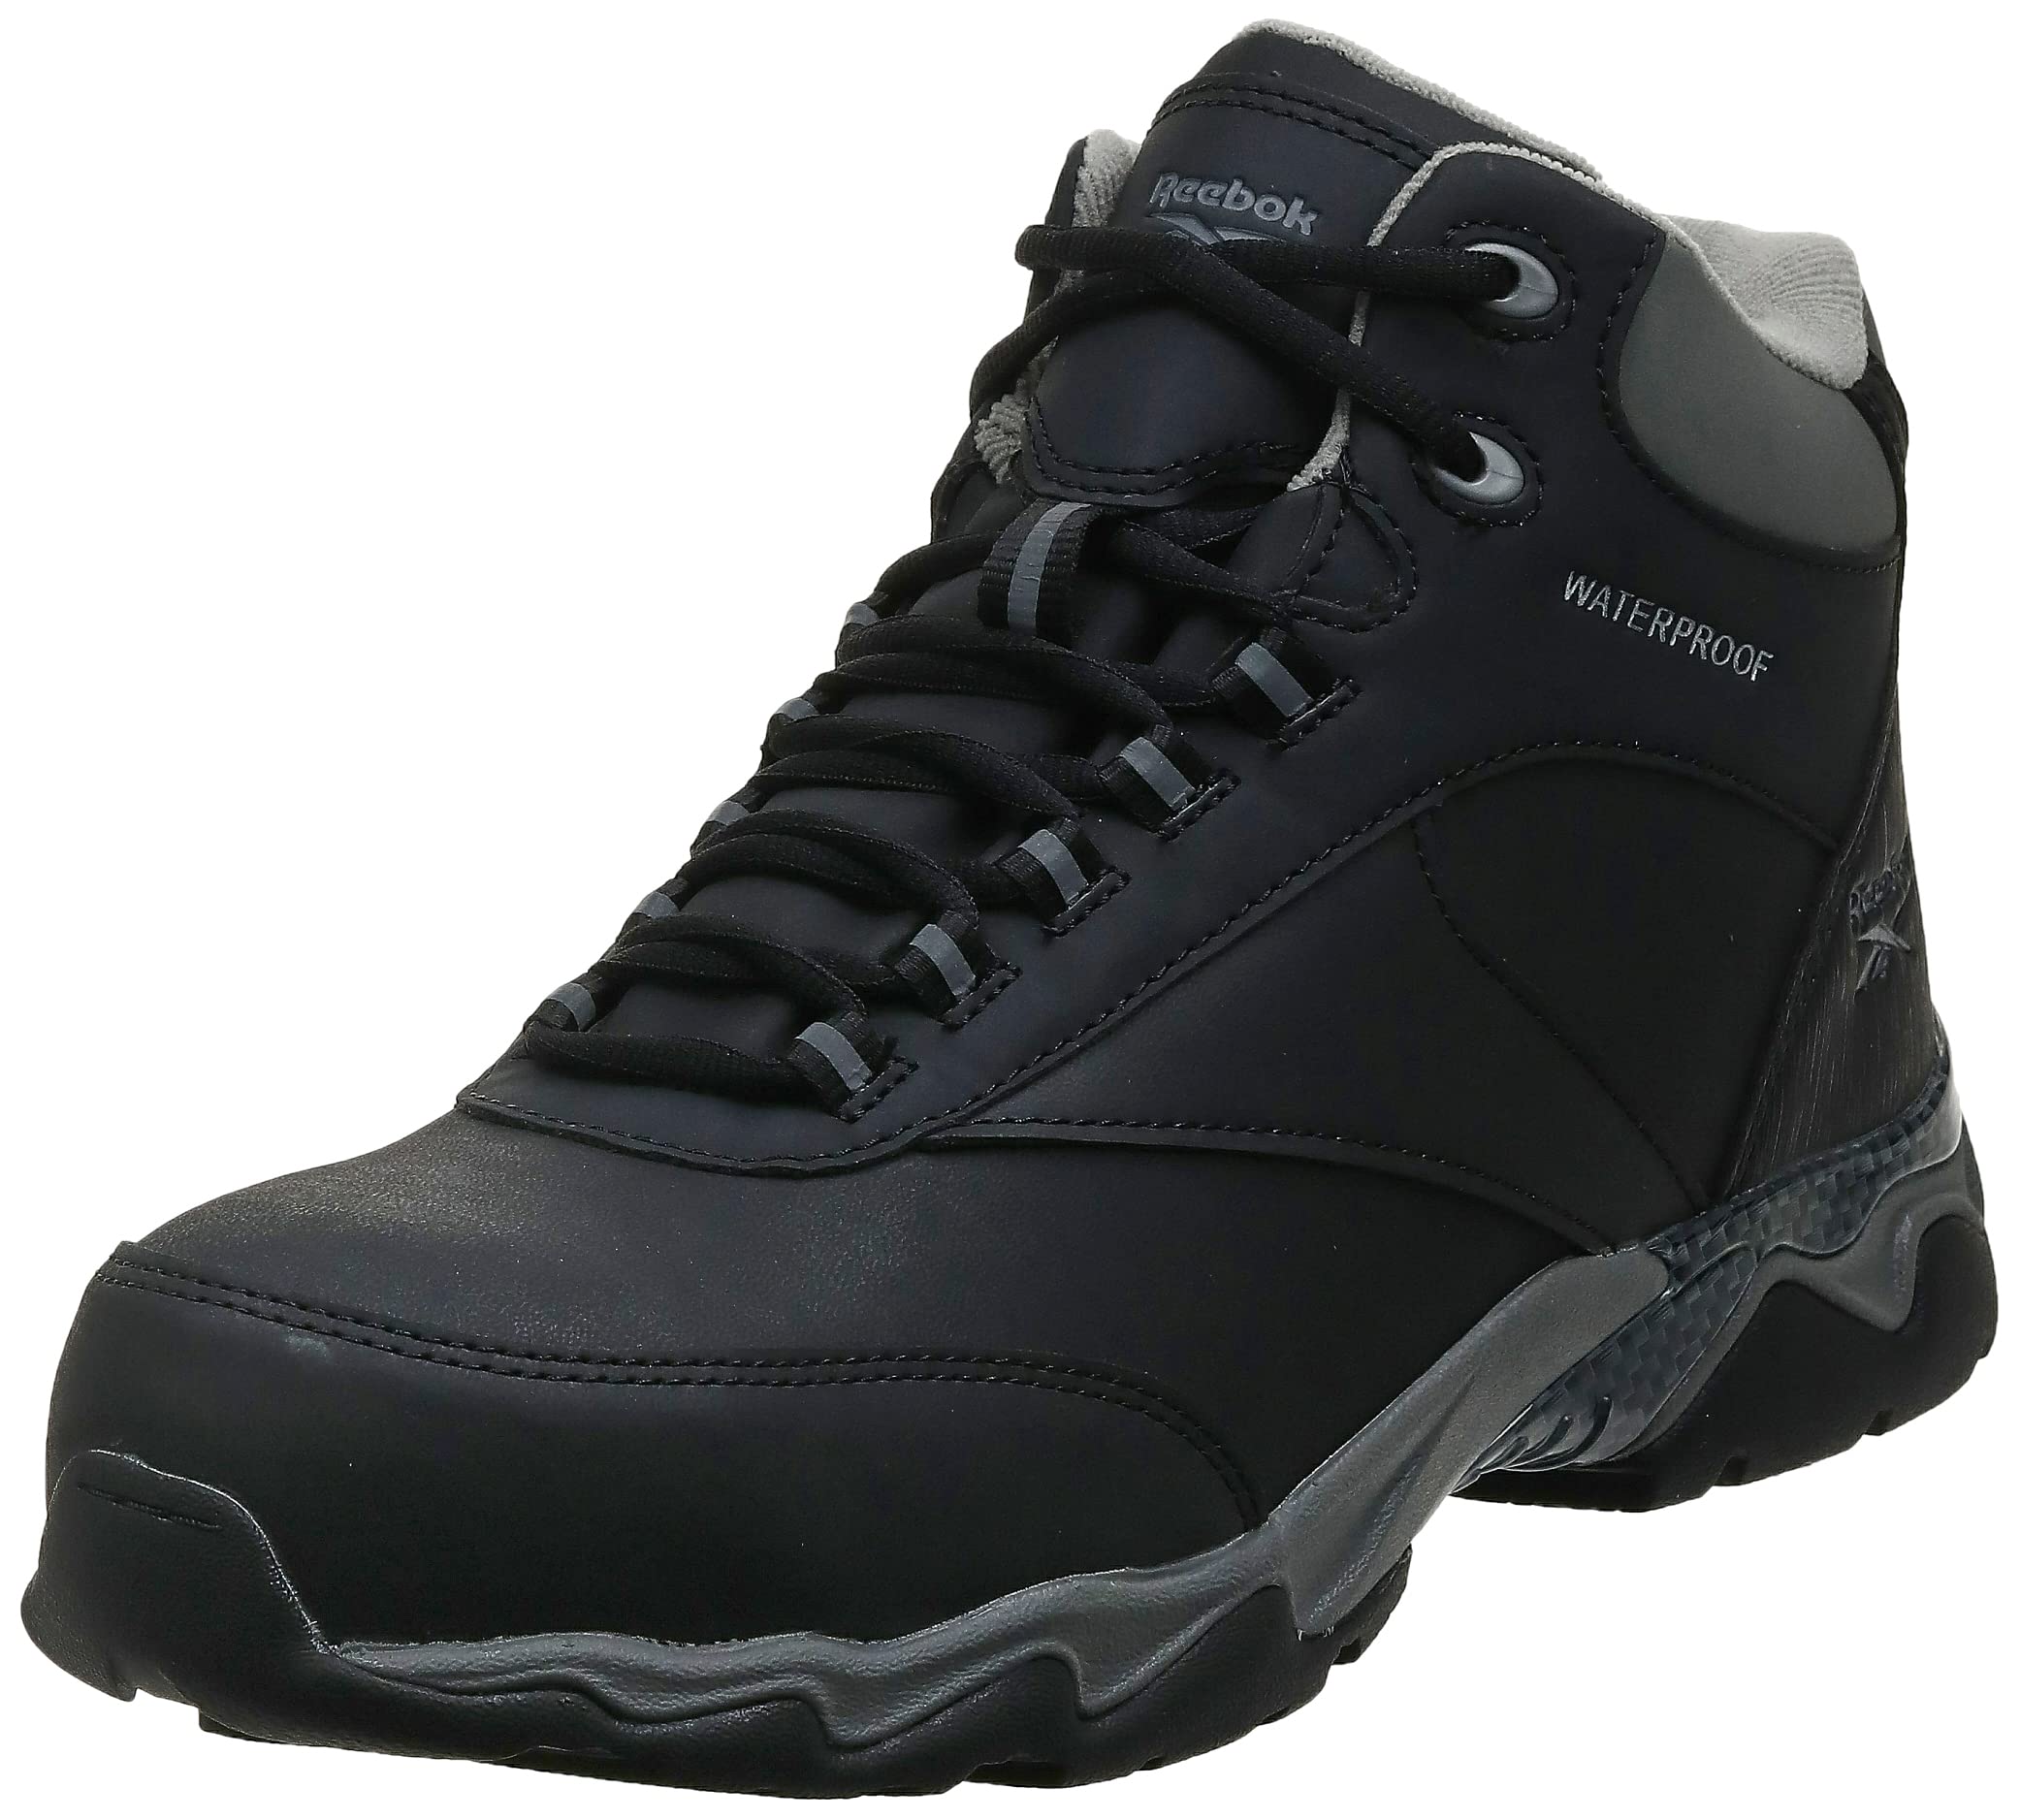 Reebok mens Beamer Safety Toe Waterproof Athletic Work Boot Industrial Construction Shoe, Black, 14 Wide US